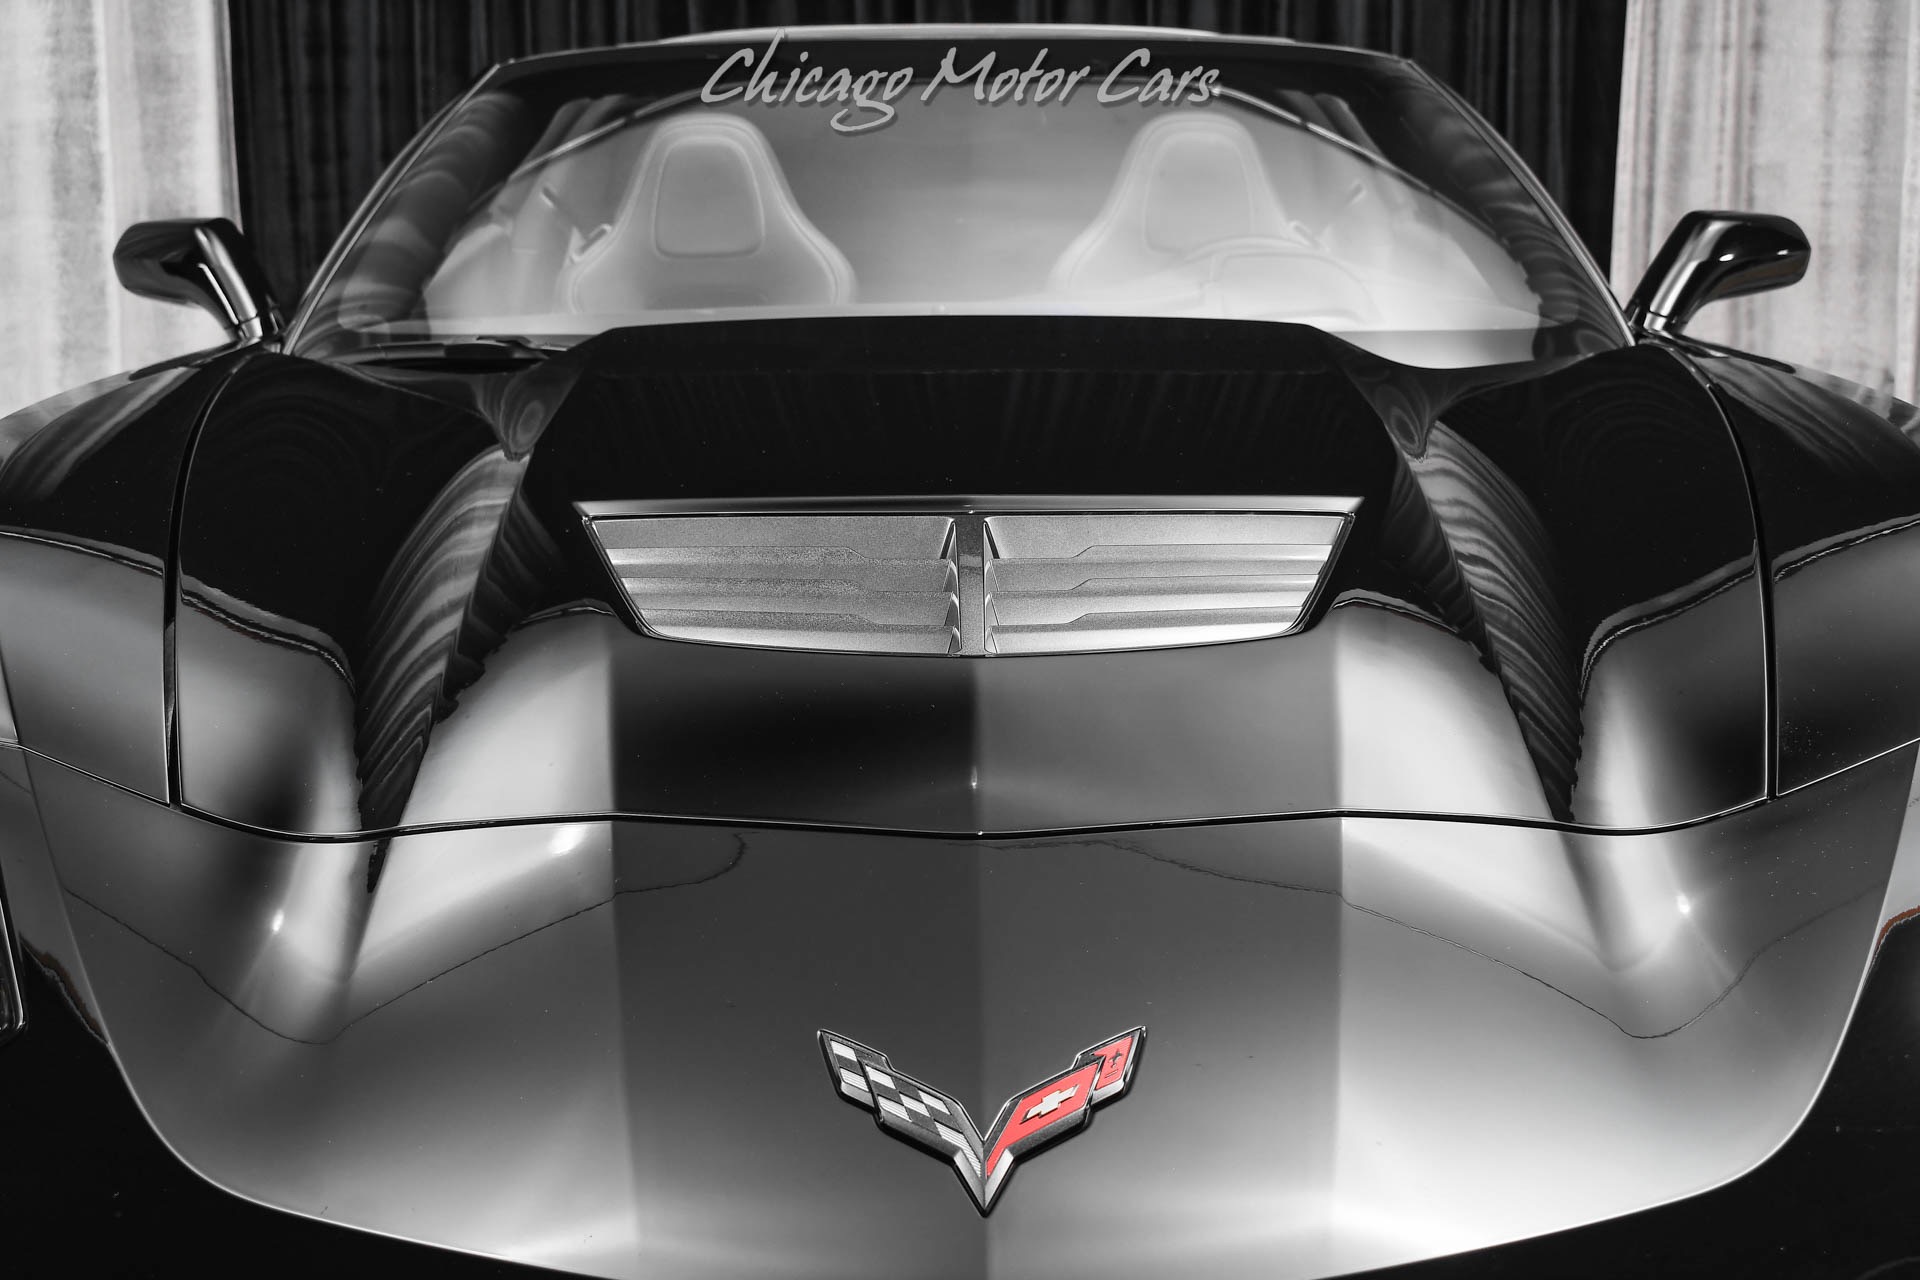 Used-2015-Chevrolet-Corvette-Z06-744-WHP-Speed-Inc-BuiltTuned-Bolt-Ons-Signature-Wheels-11K-Miles